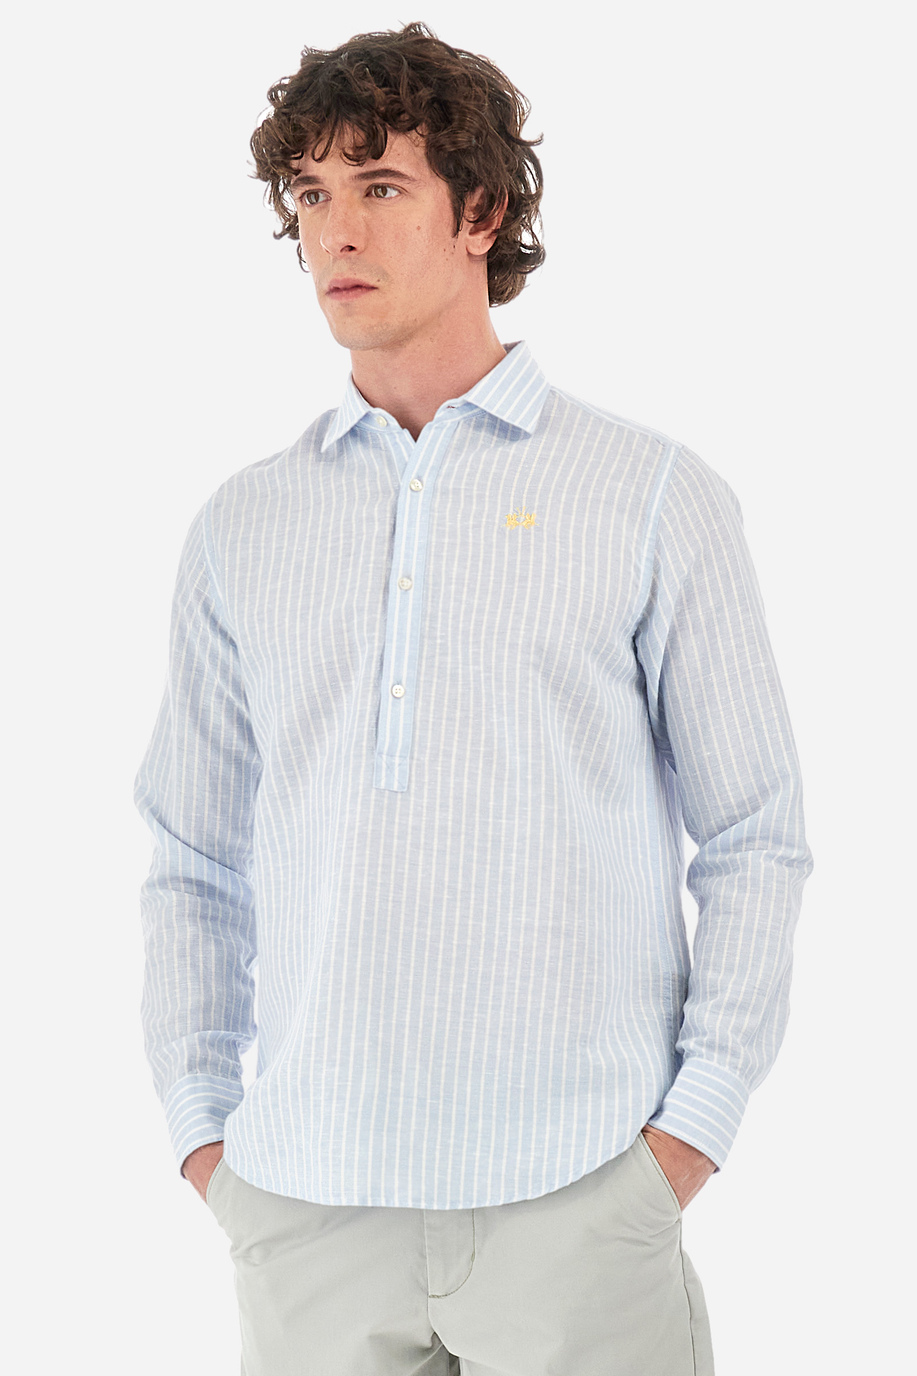 Hemd aus Baumwolle gestreift - Innocent - Hemden | La Martina - Official Online Shop